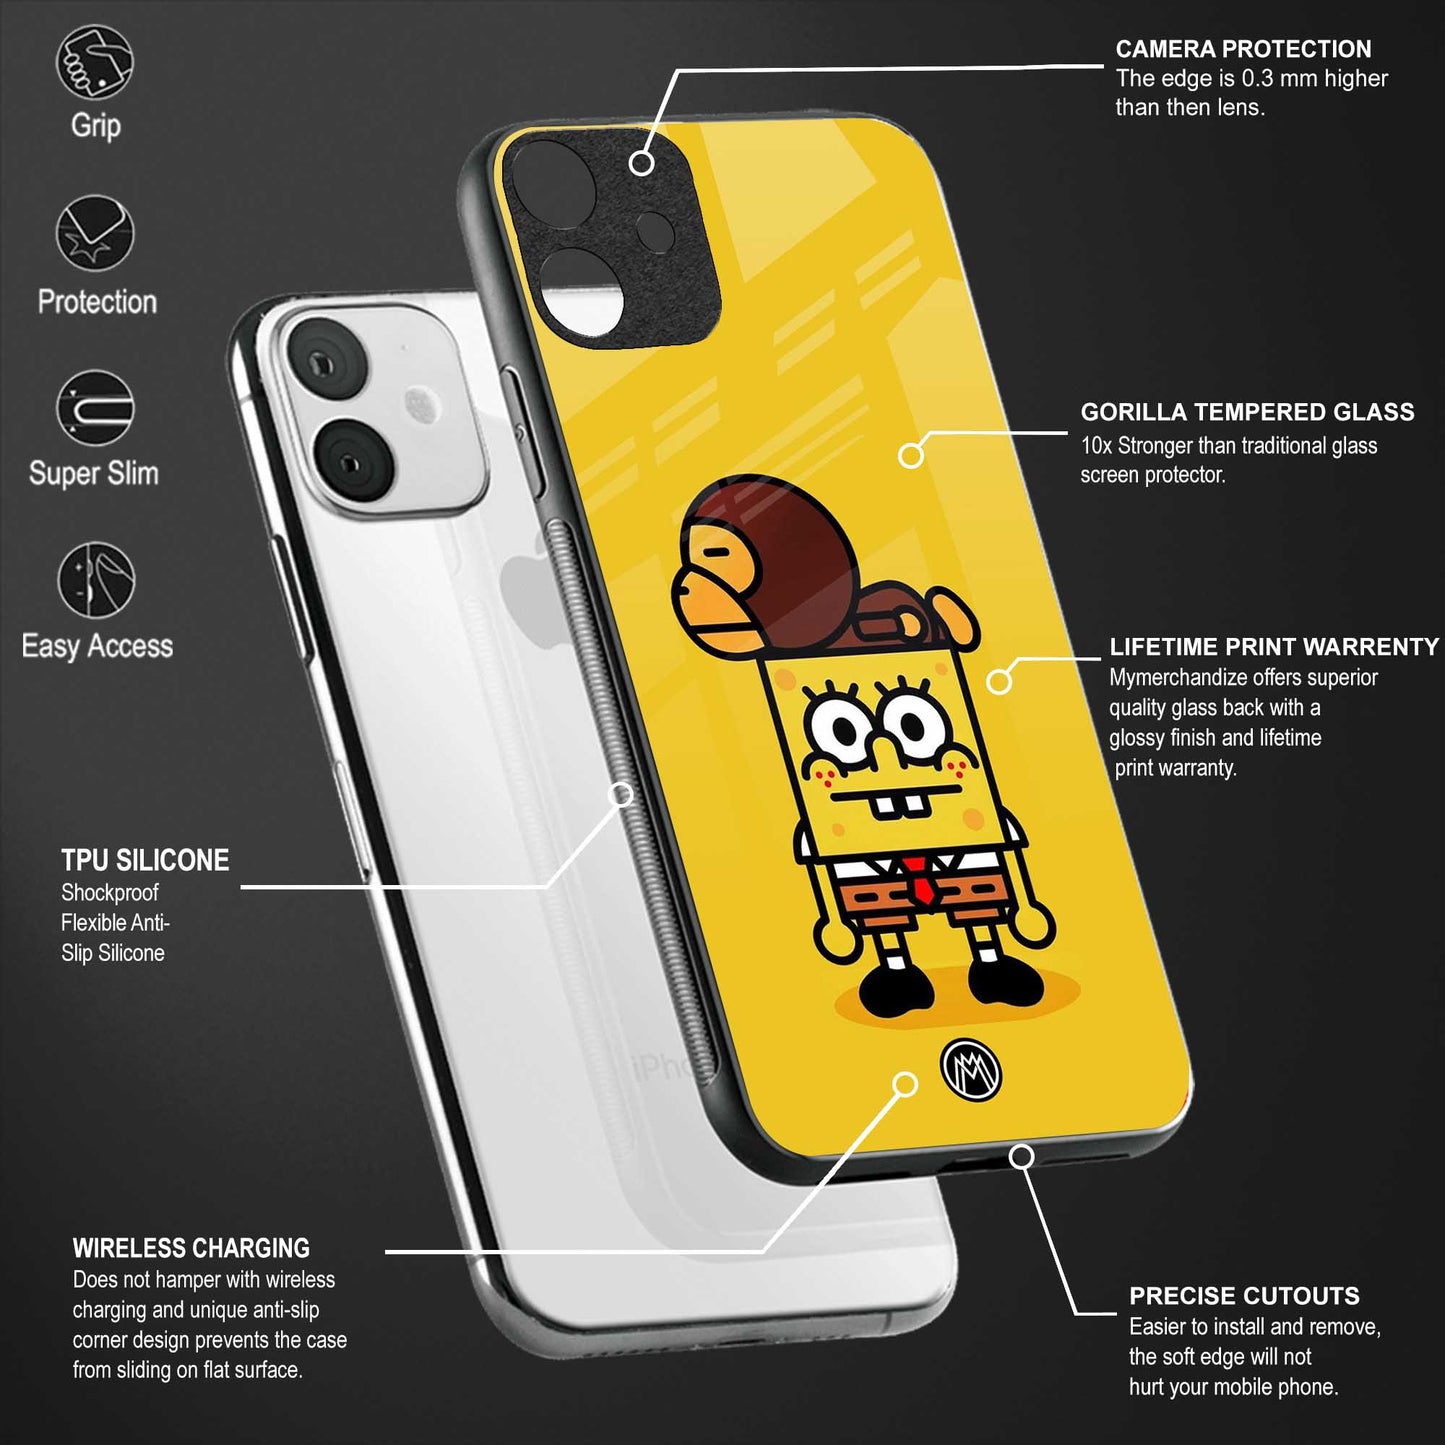 spongebob x bape back phone cover | glass case for vivo y73